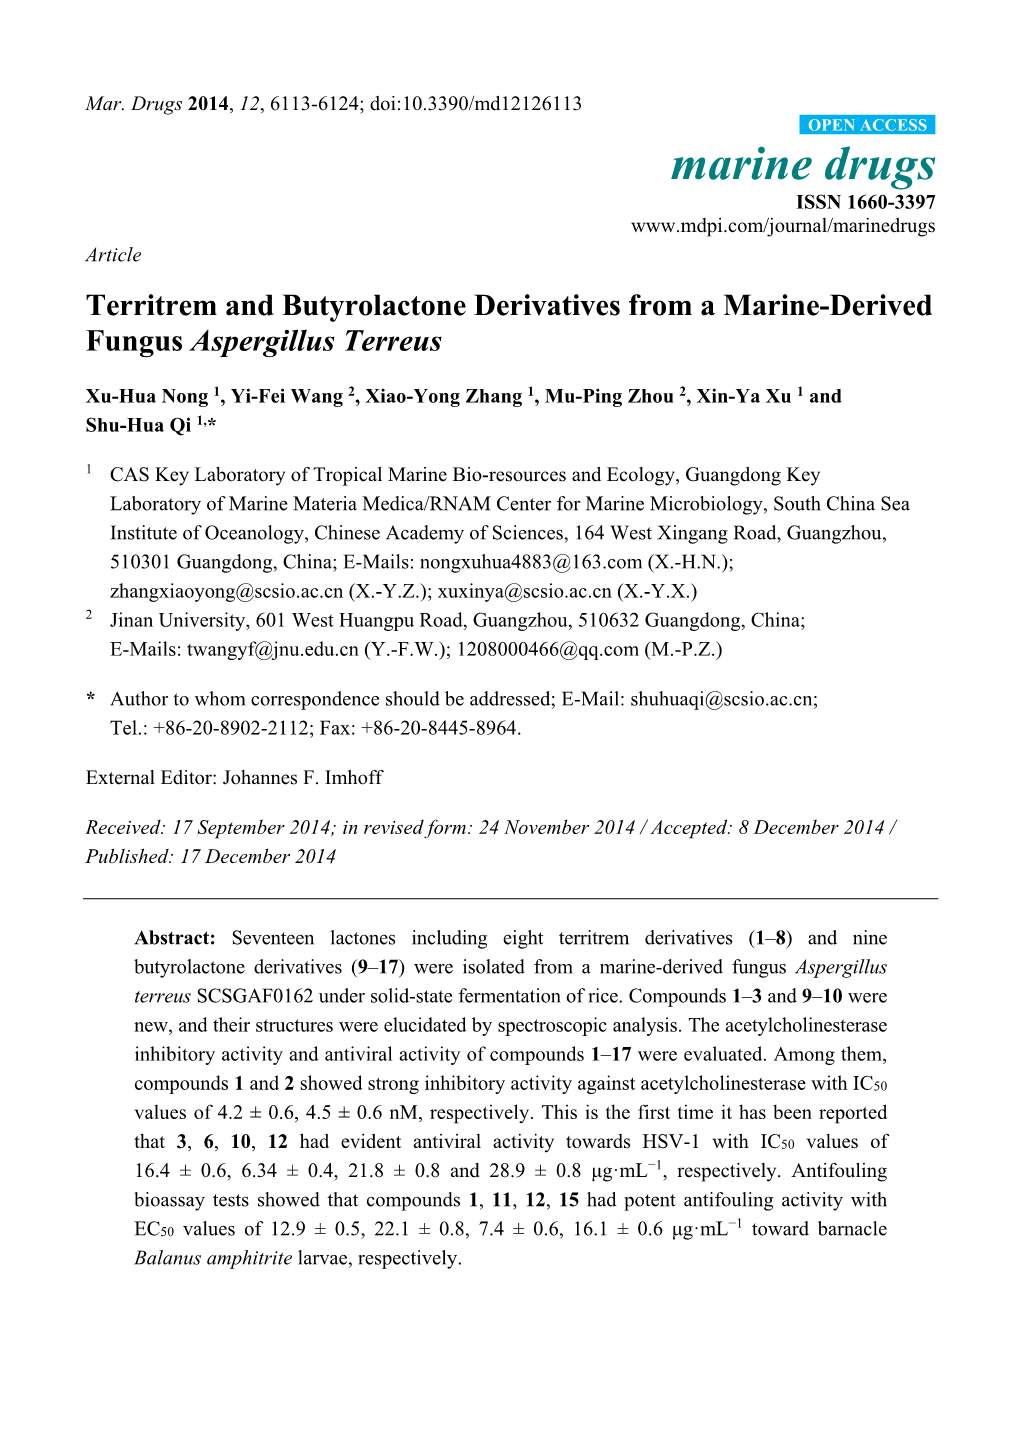 Territrem and Butyrolactone Derivatives from a Marine-Derived Fungus Aspergillus Terreus